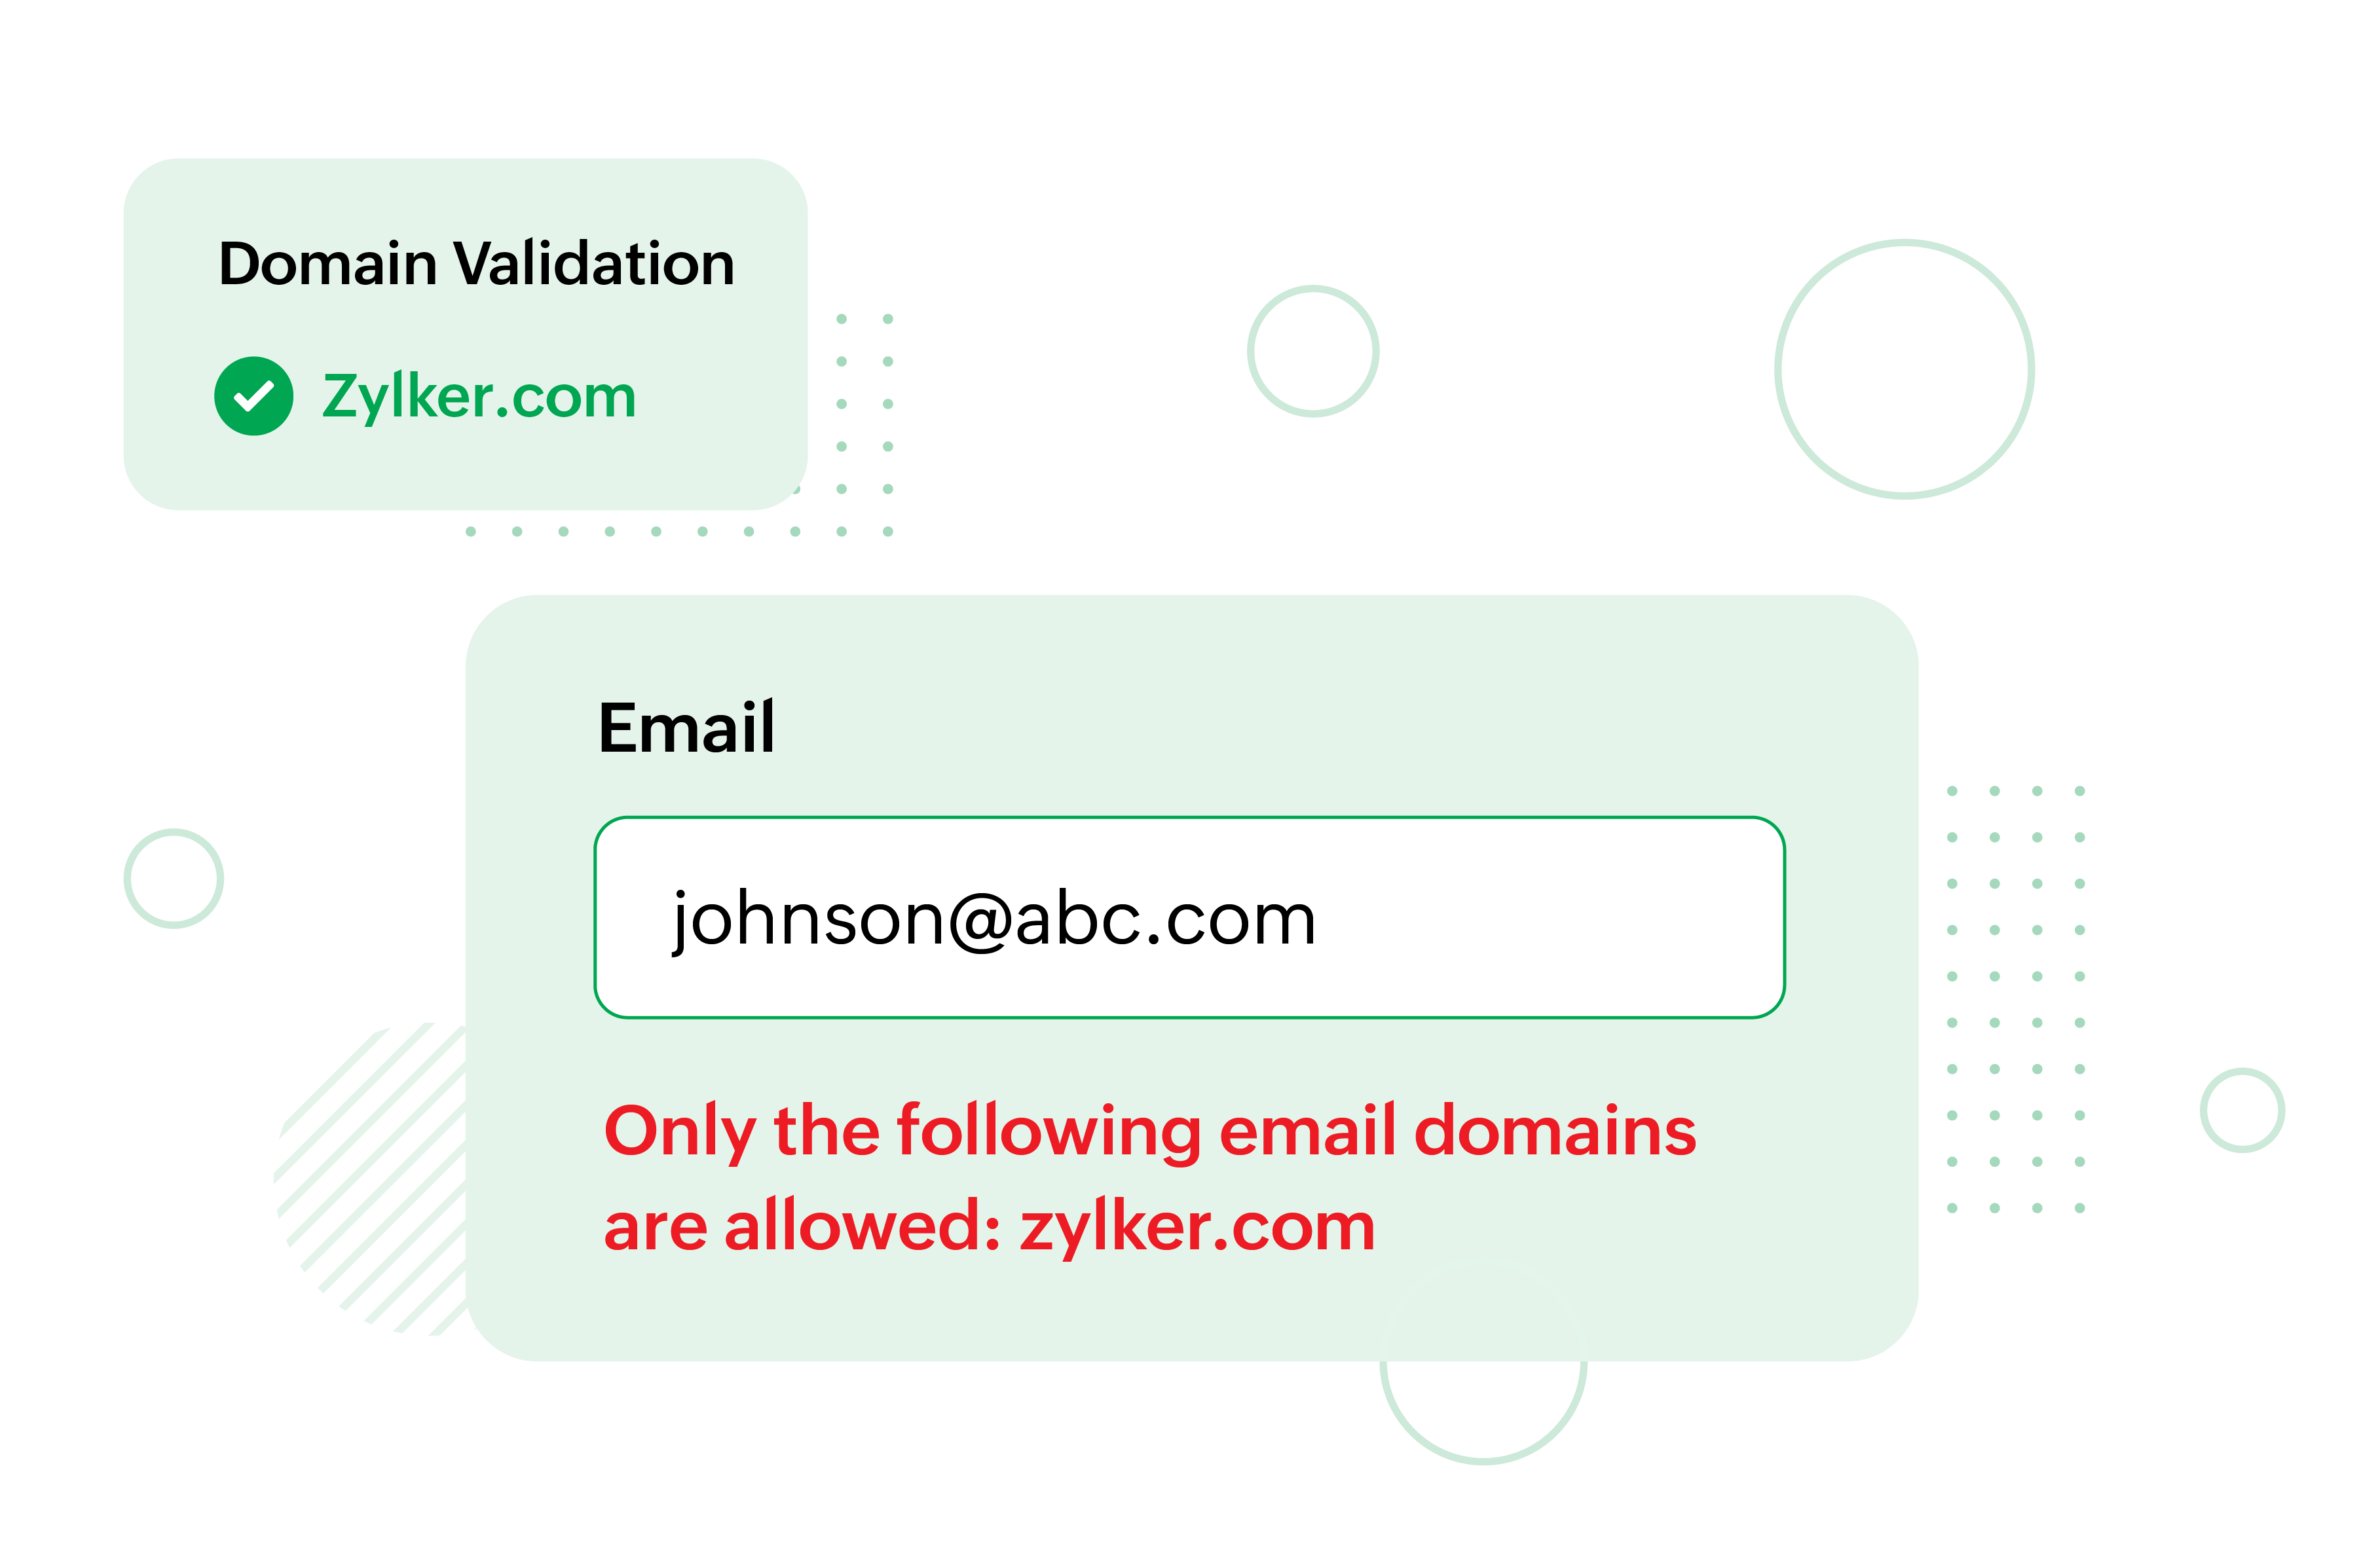 Domain validation